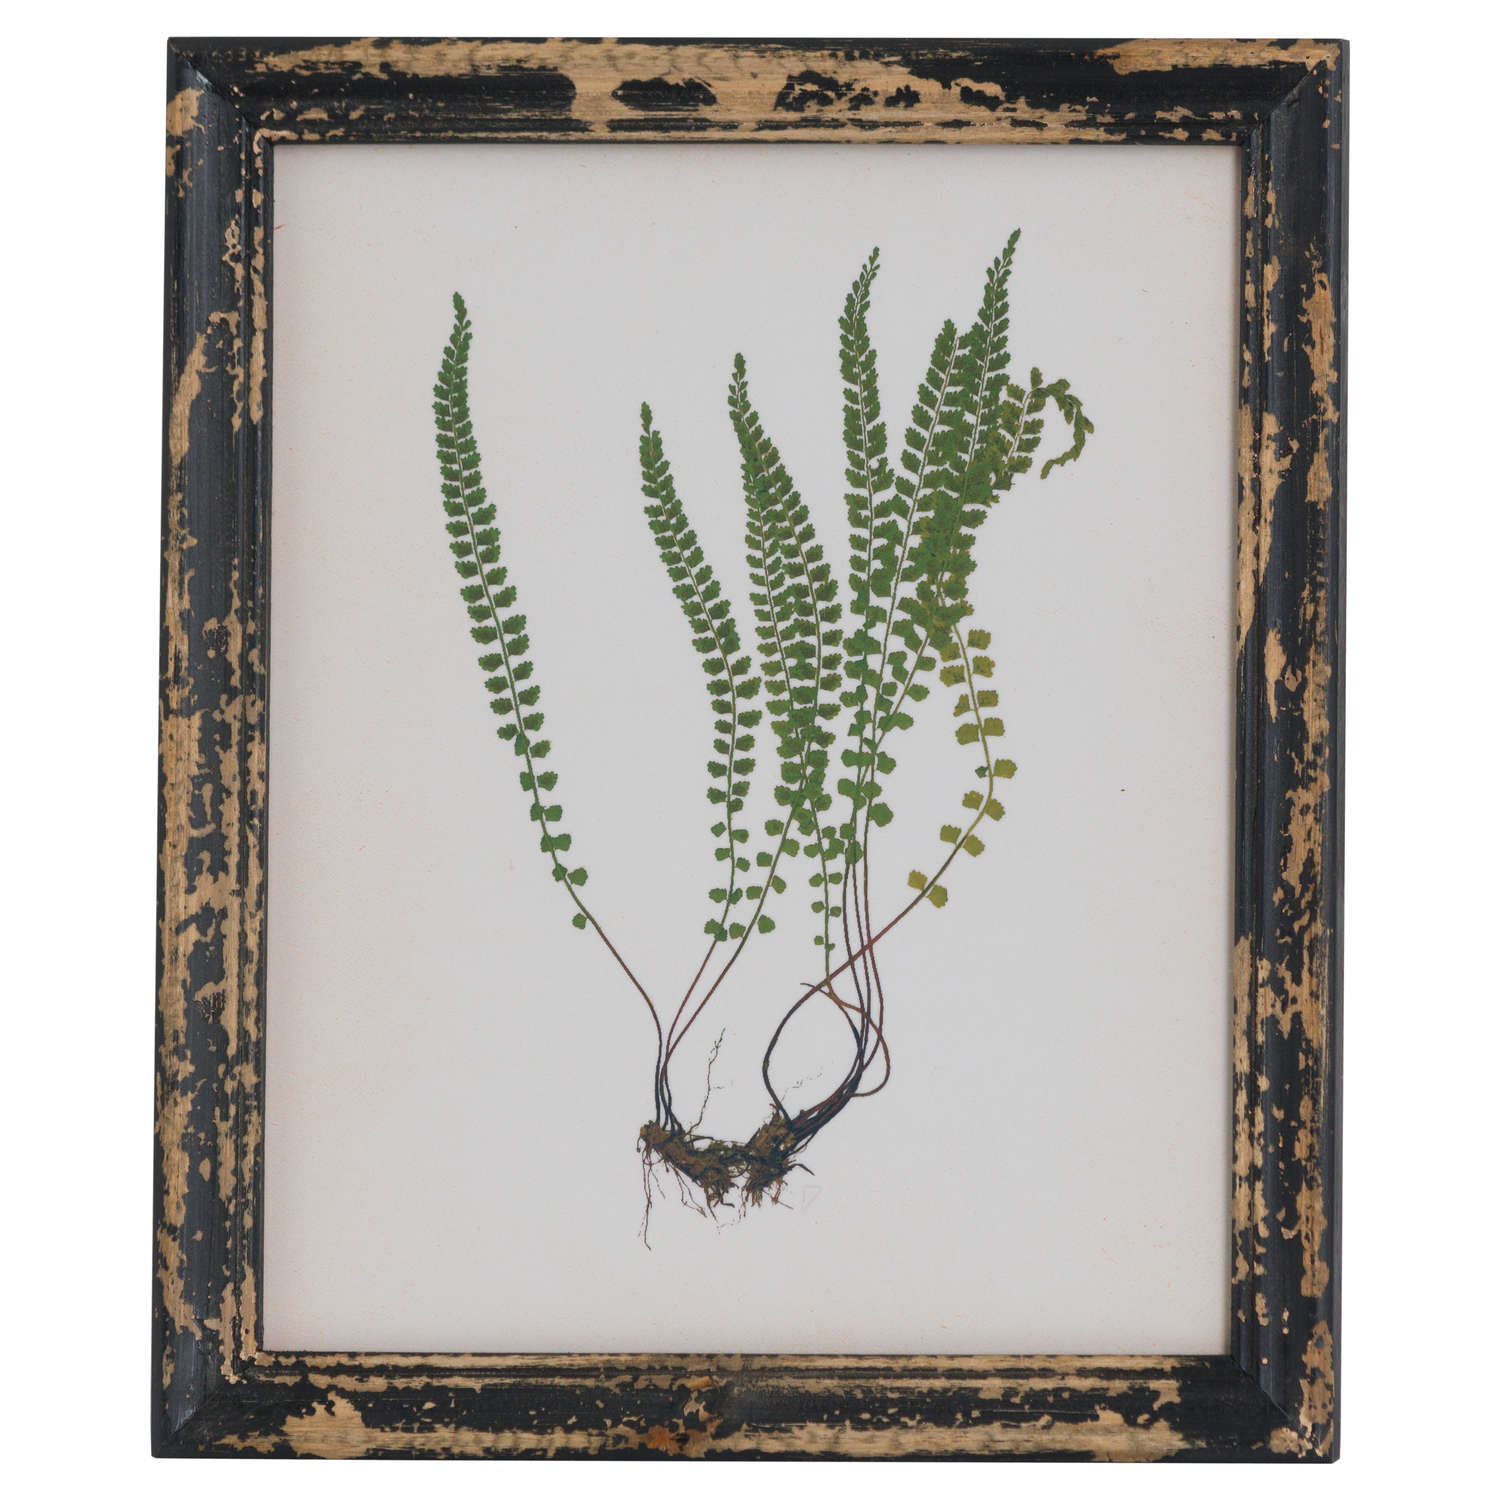 Rustic Framed Botanical Picture